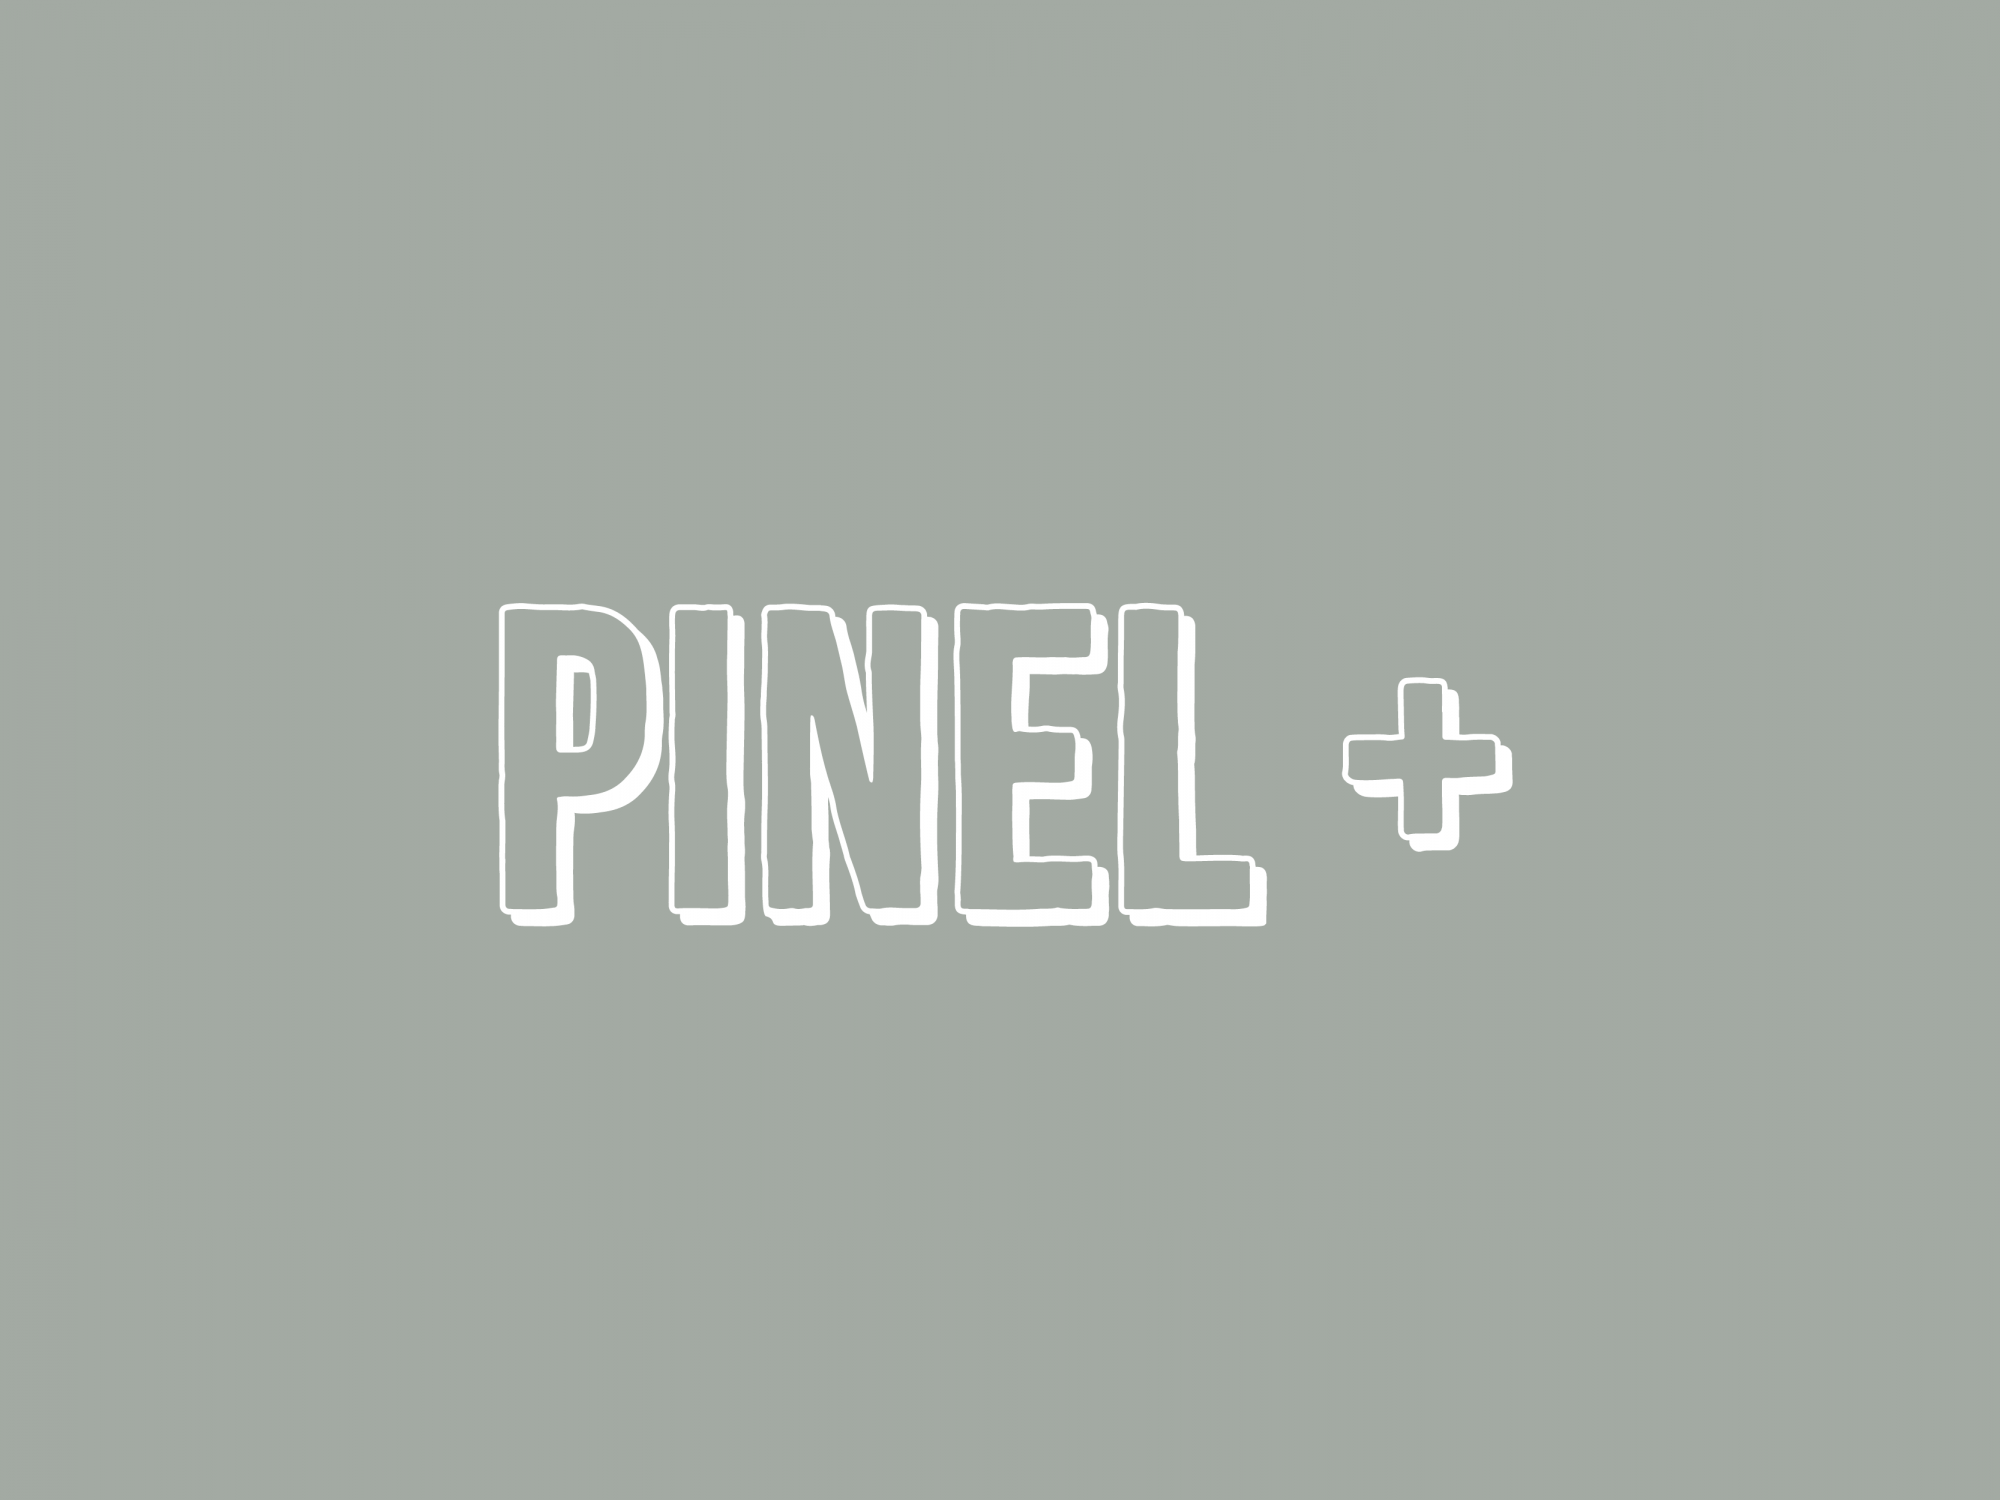 Pinel +